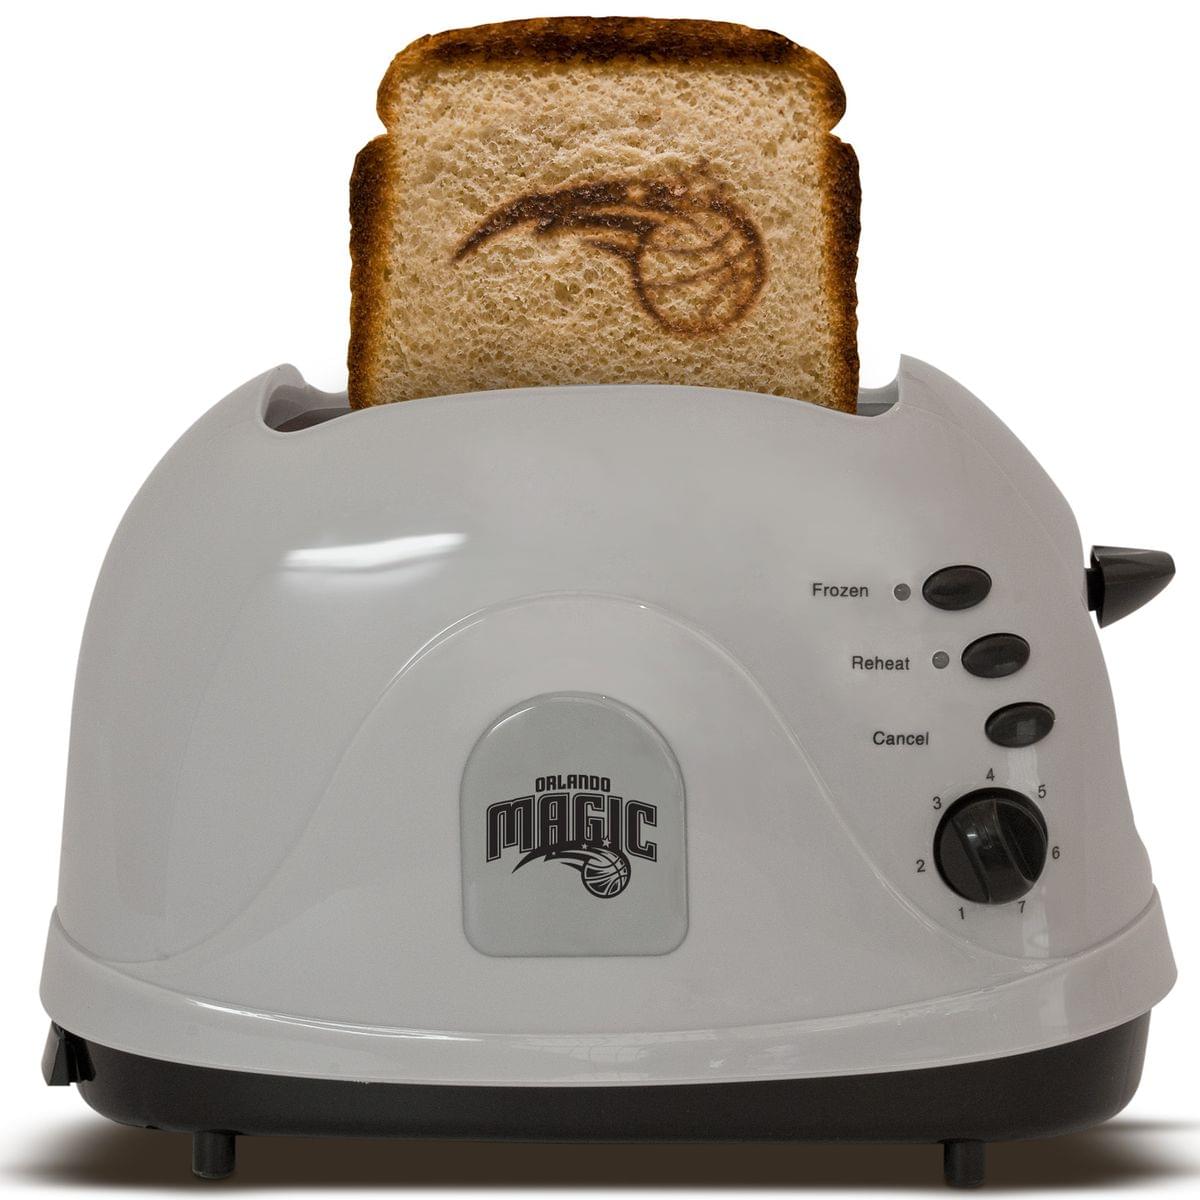 Orlando Magic NBA ProToast Toaster